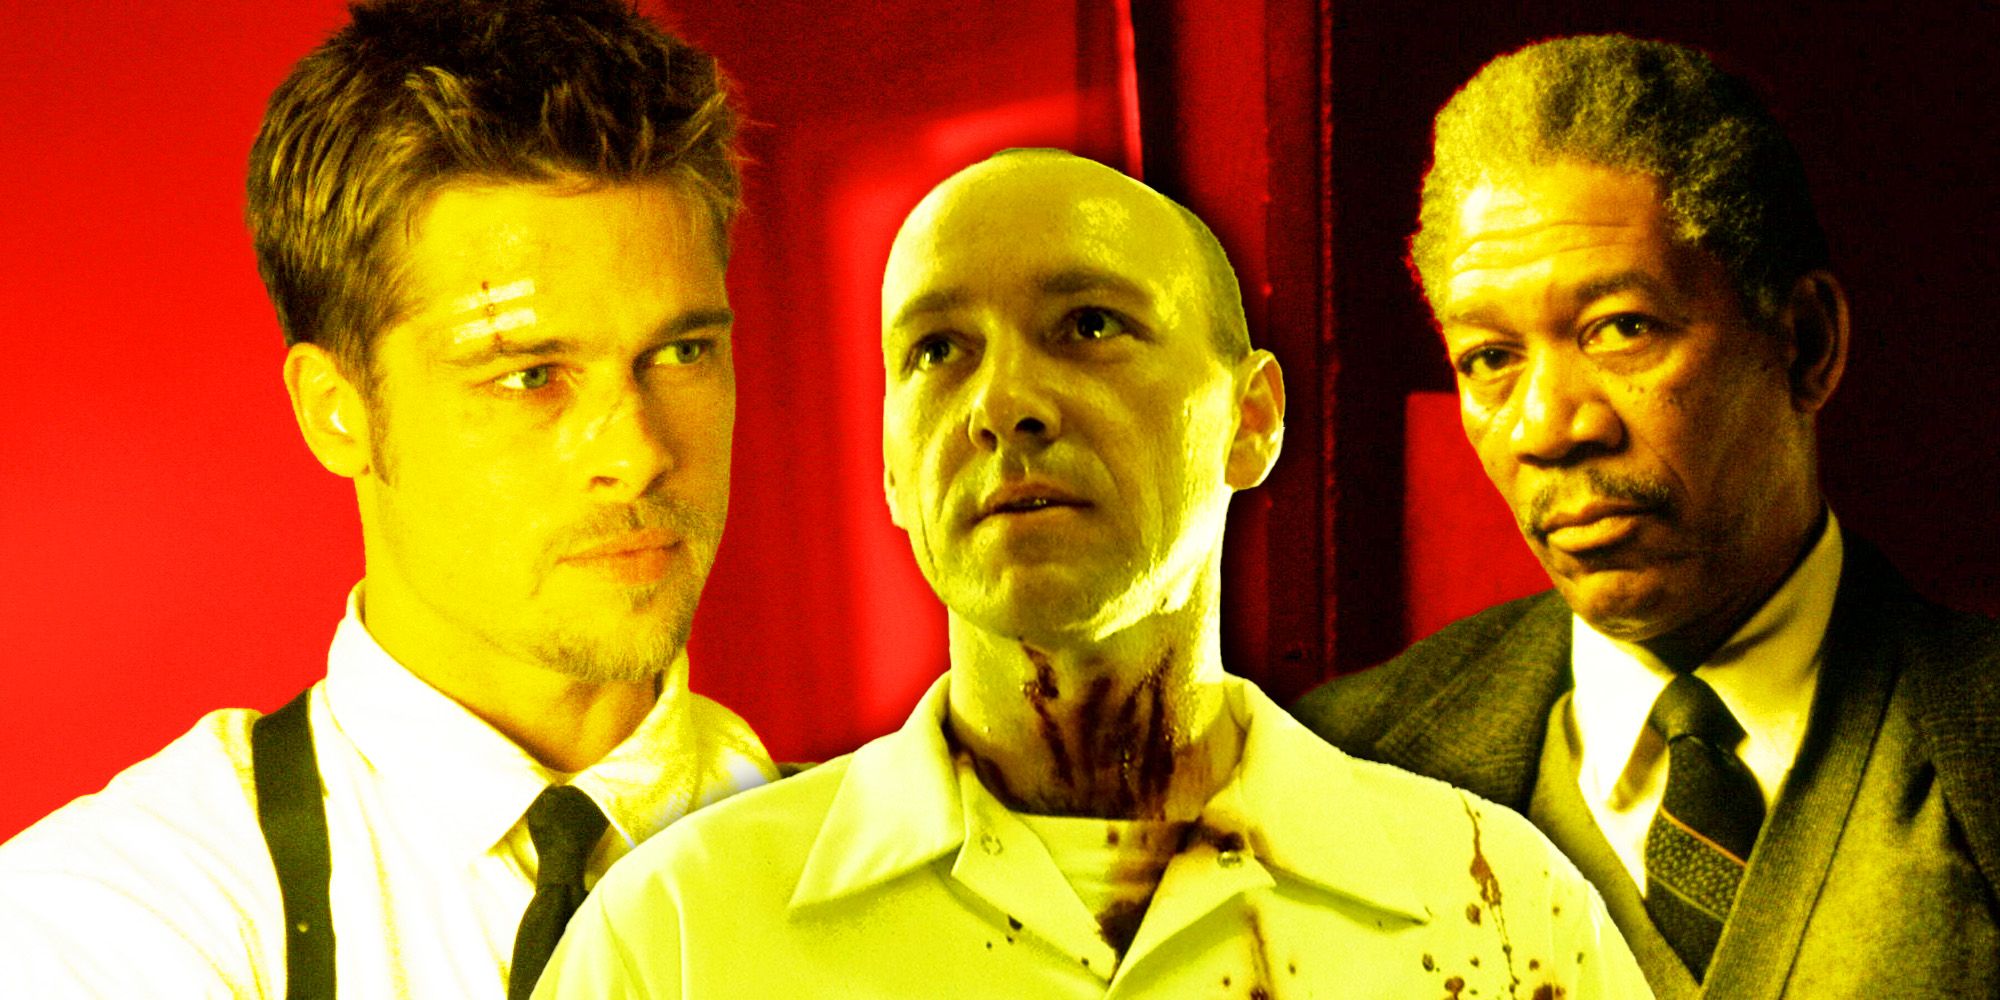 Se7en Brad Pitt as Mills Kevin Spacey as John Doe and Martin Freeman as Somerset in Seven